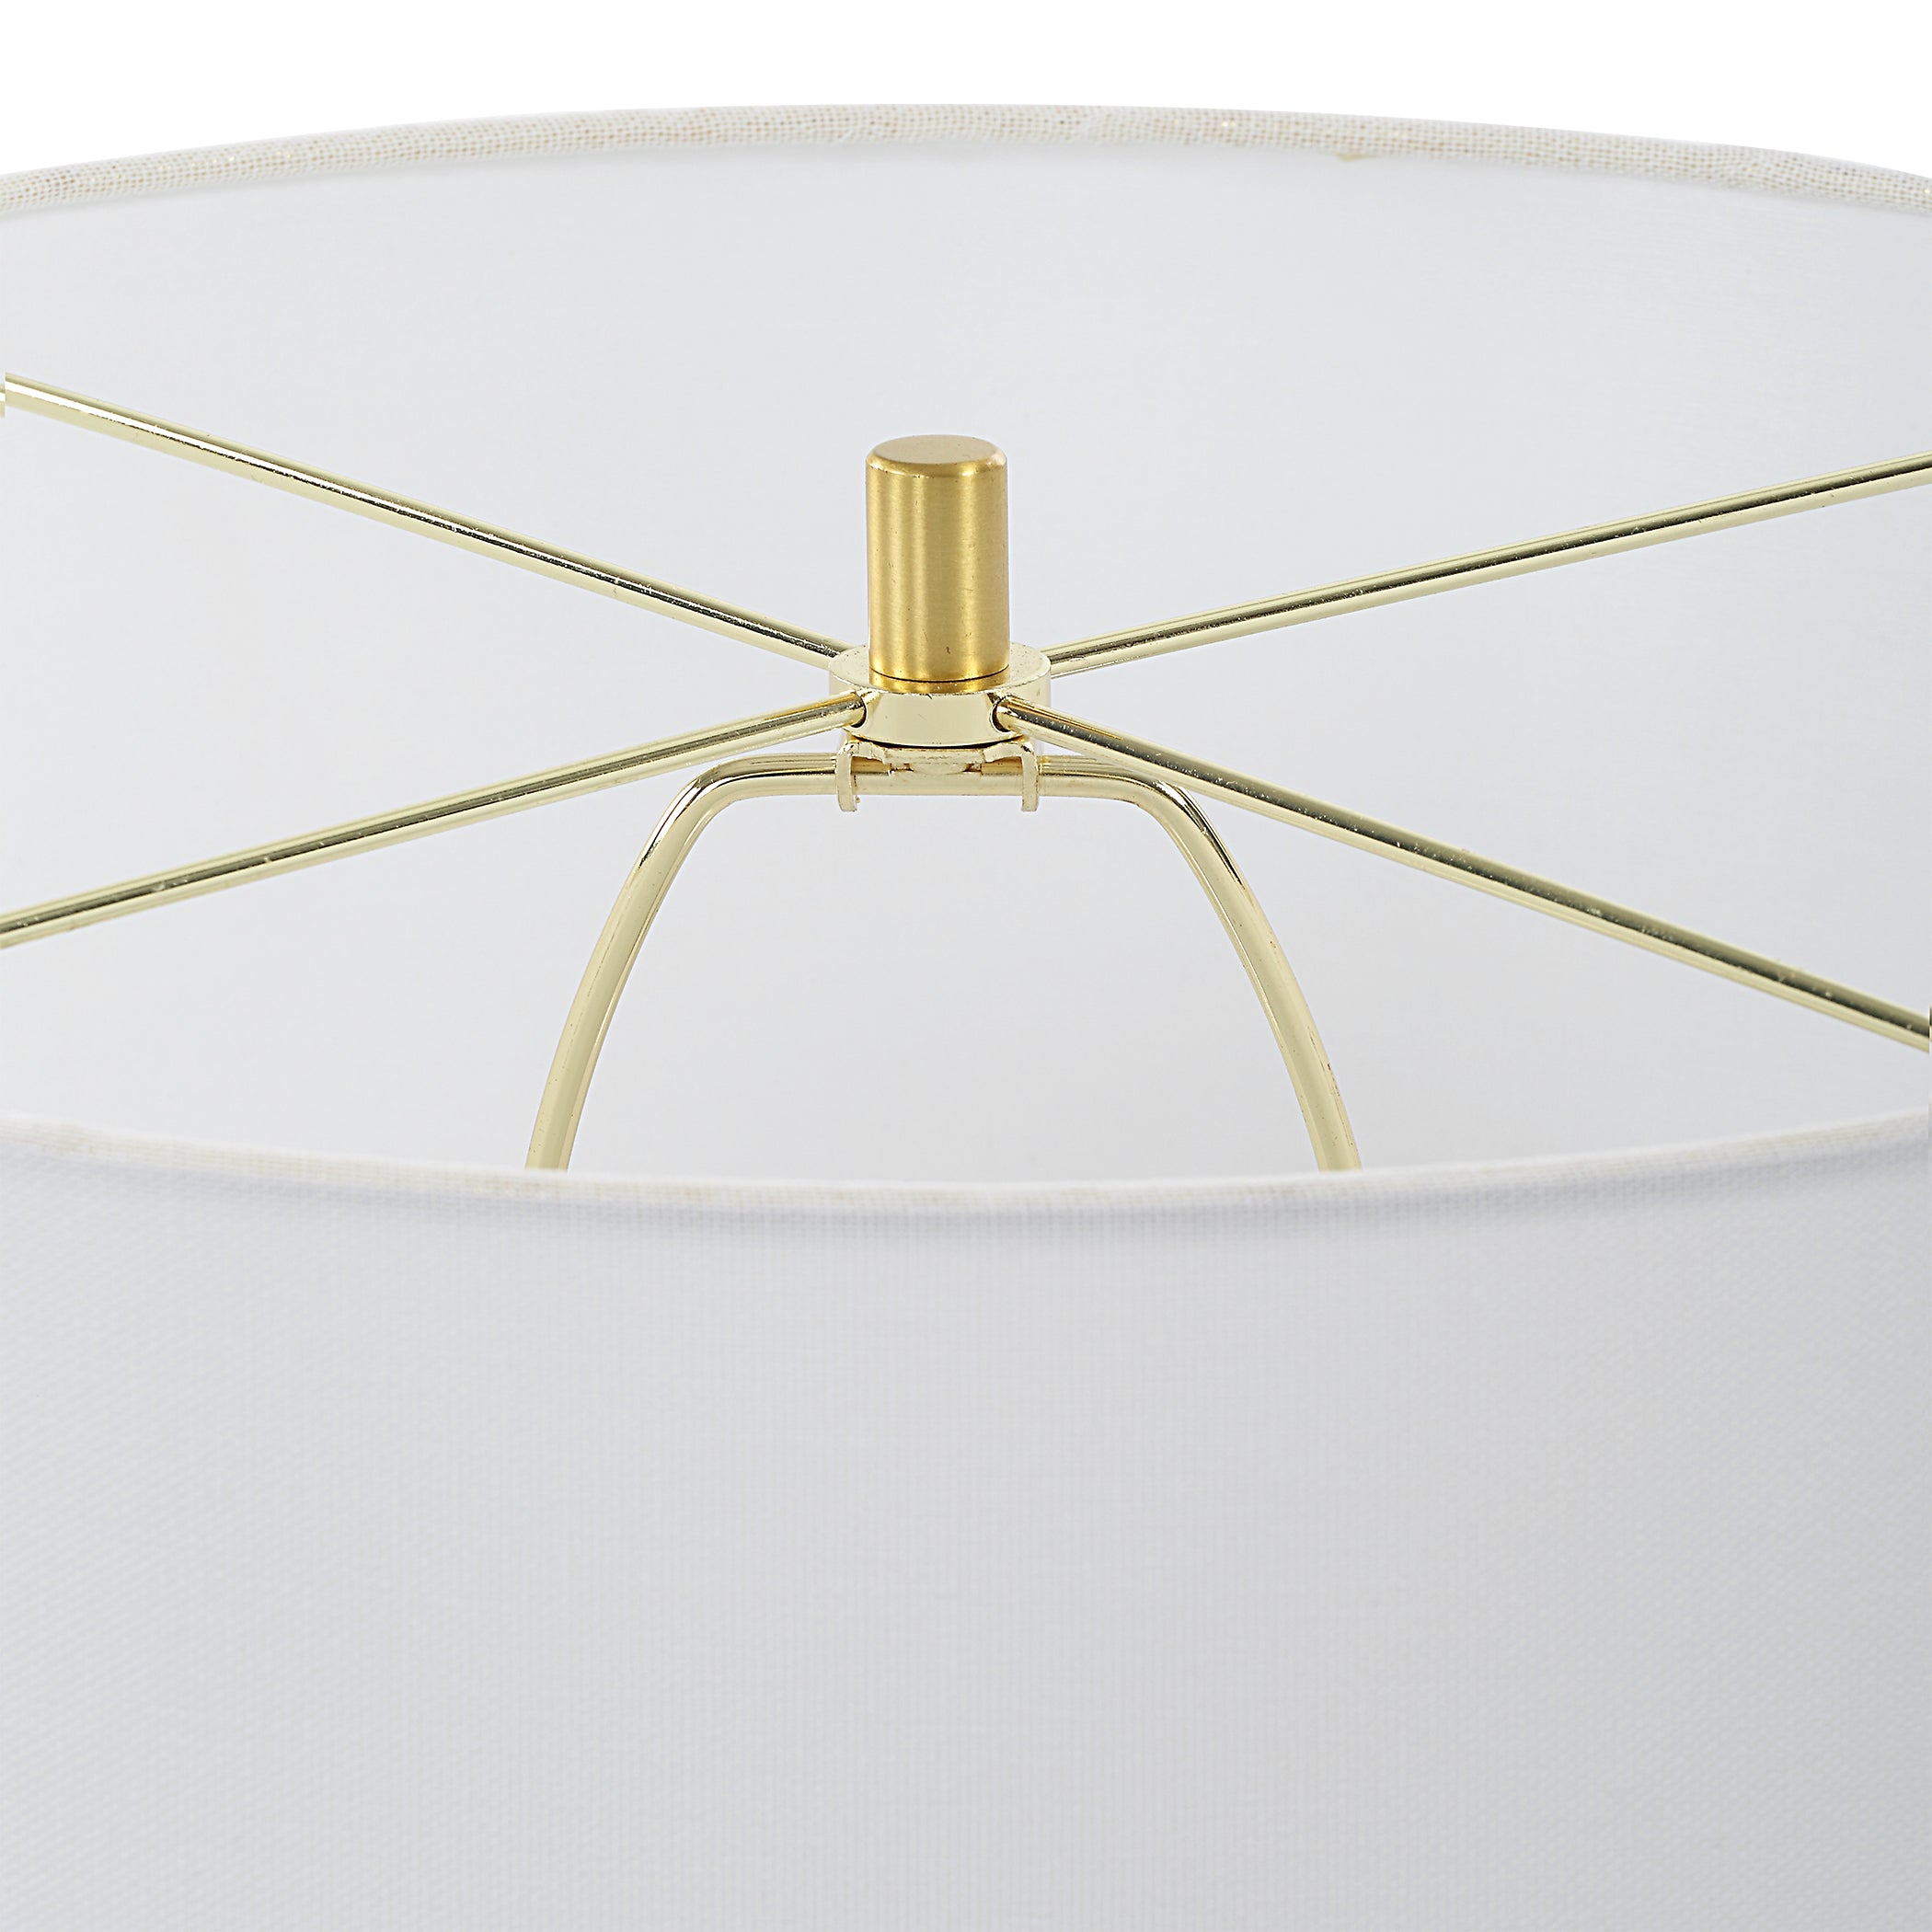 Uttermost Emerie Textured White Table Lamp